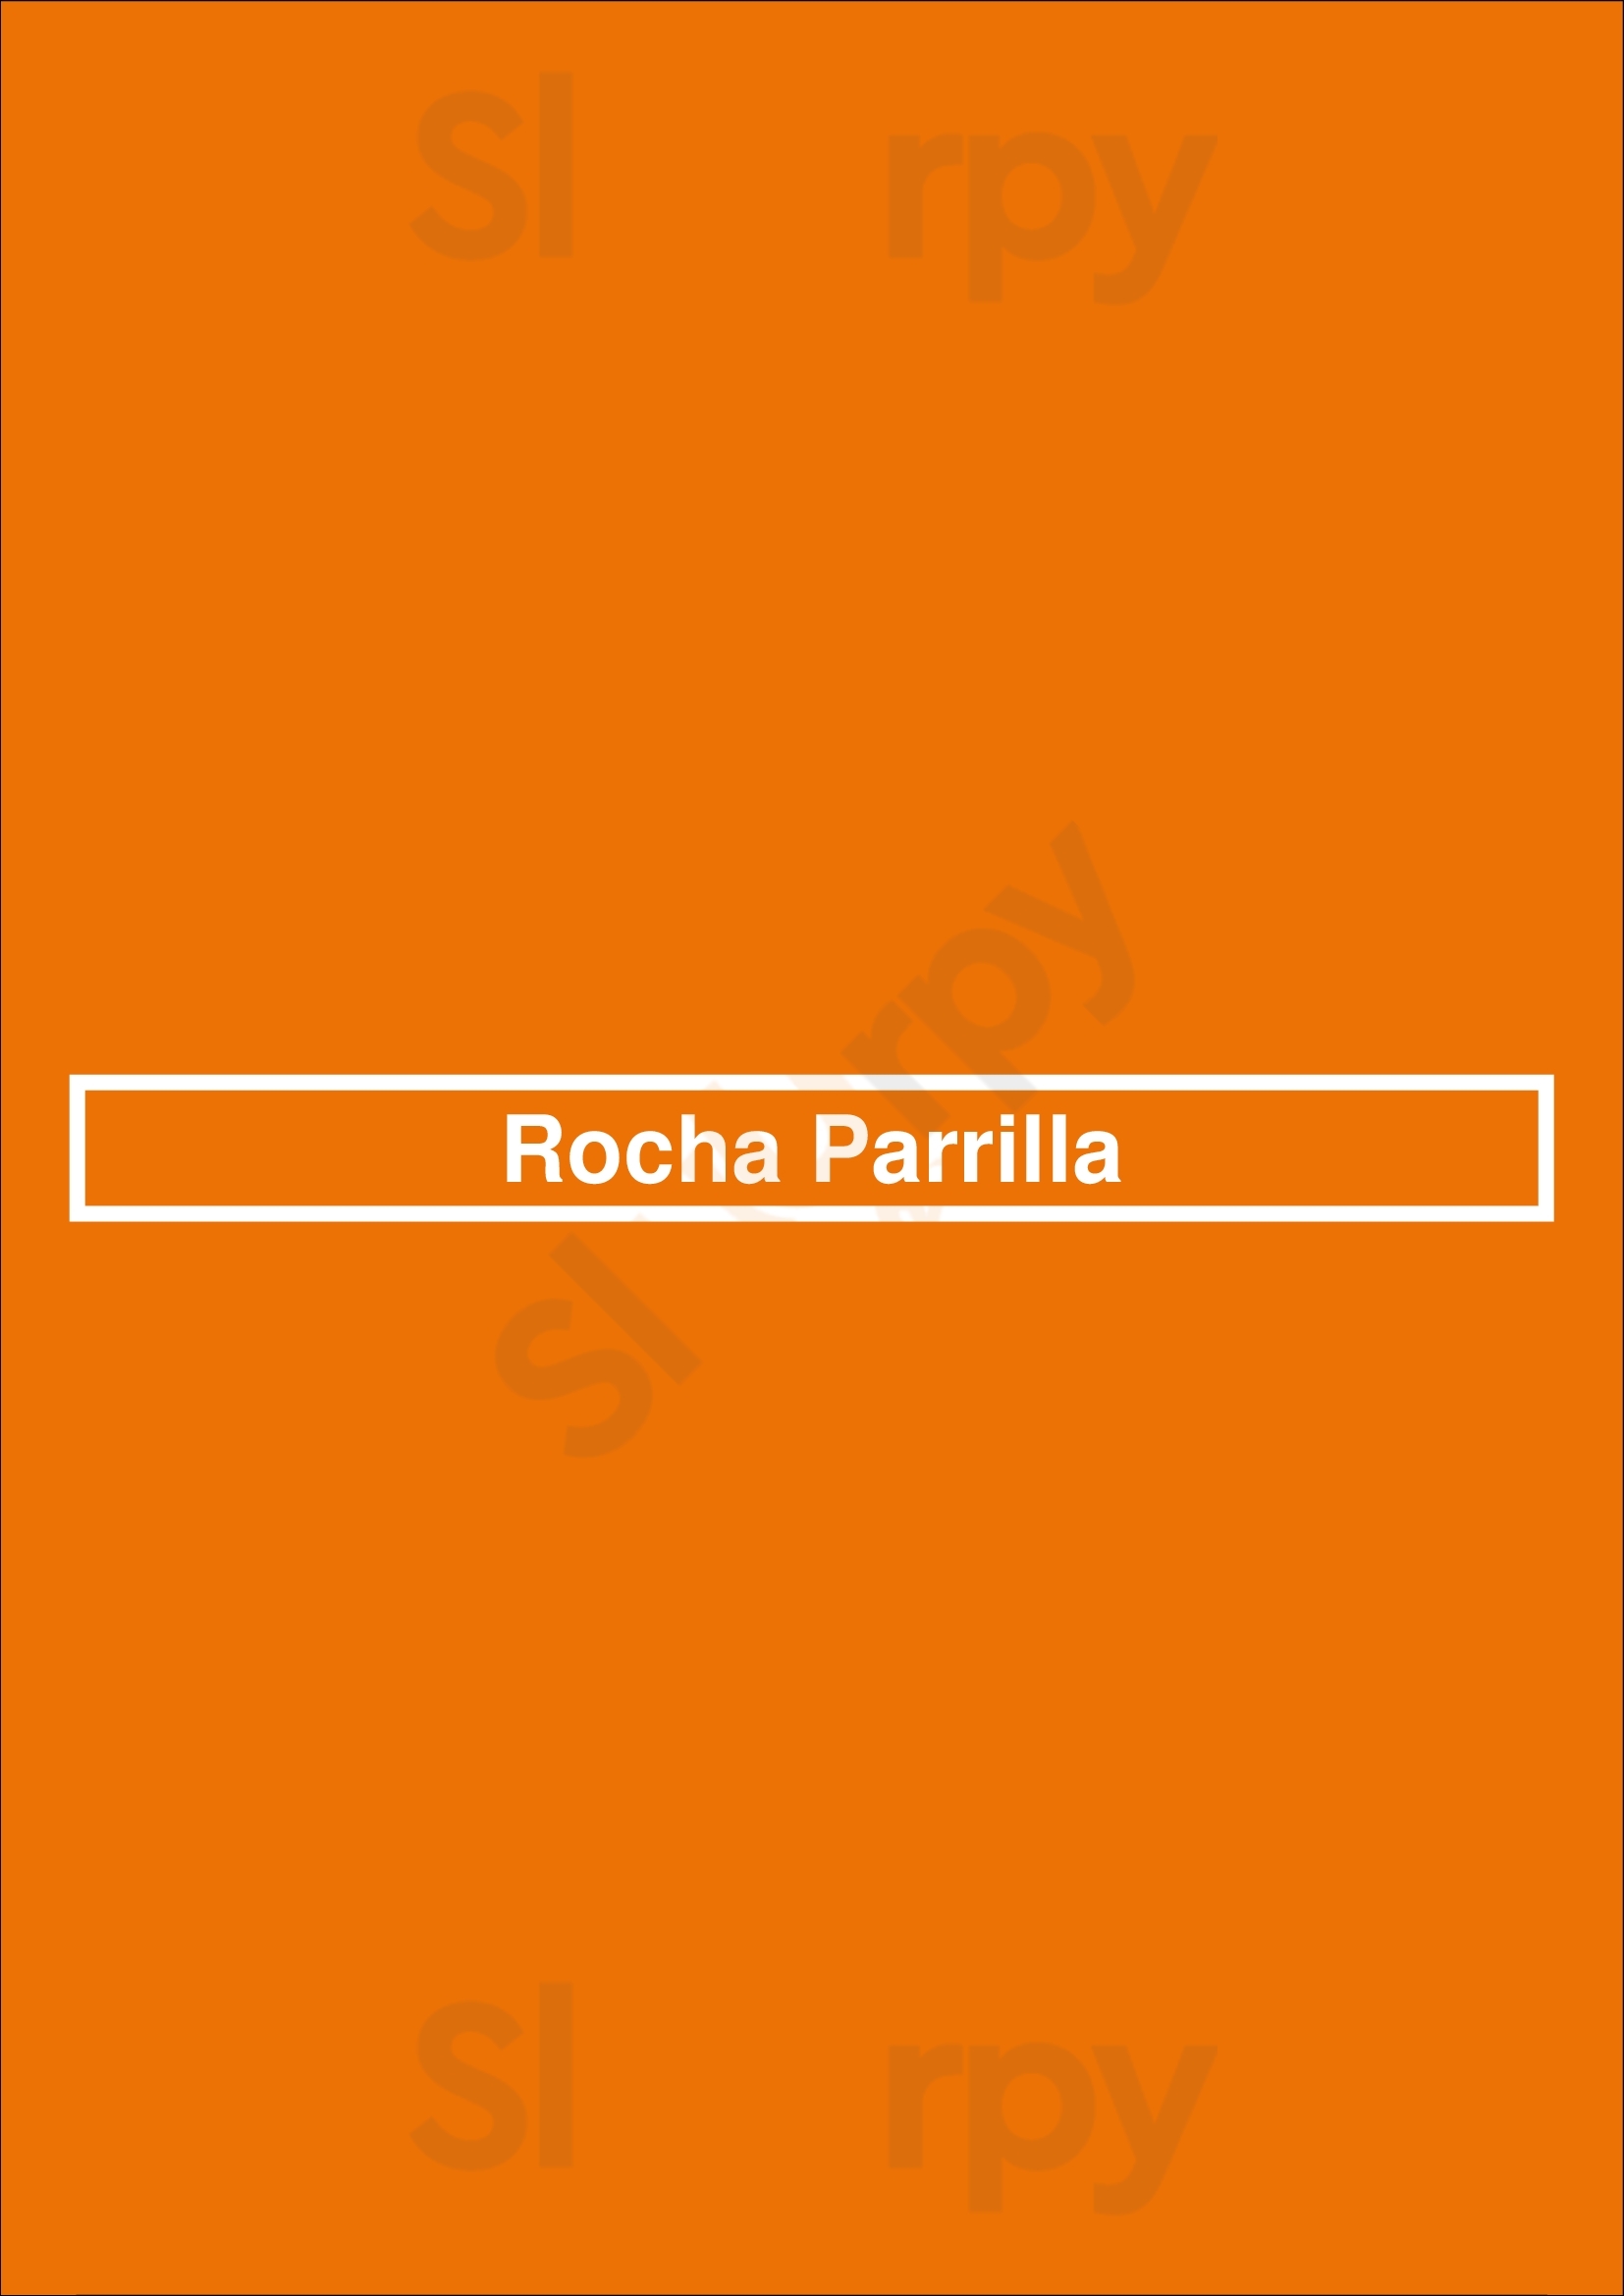 Rocha Parrilla San Isidro Menu - 1